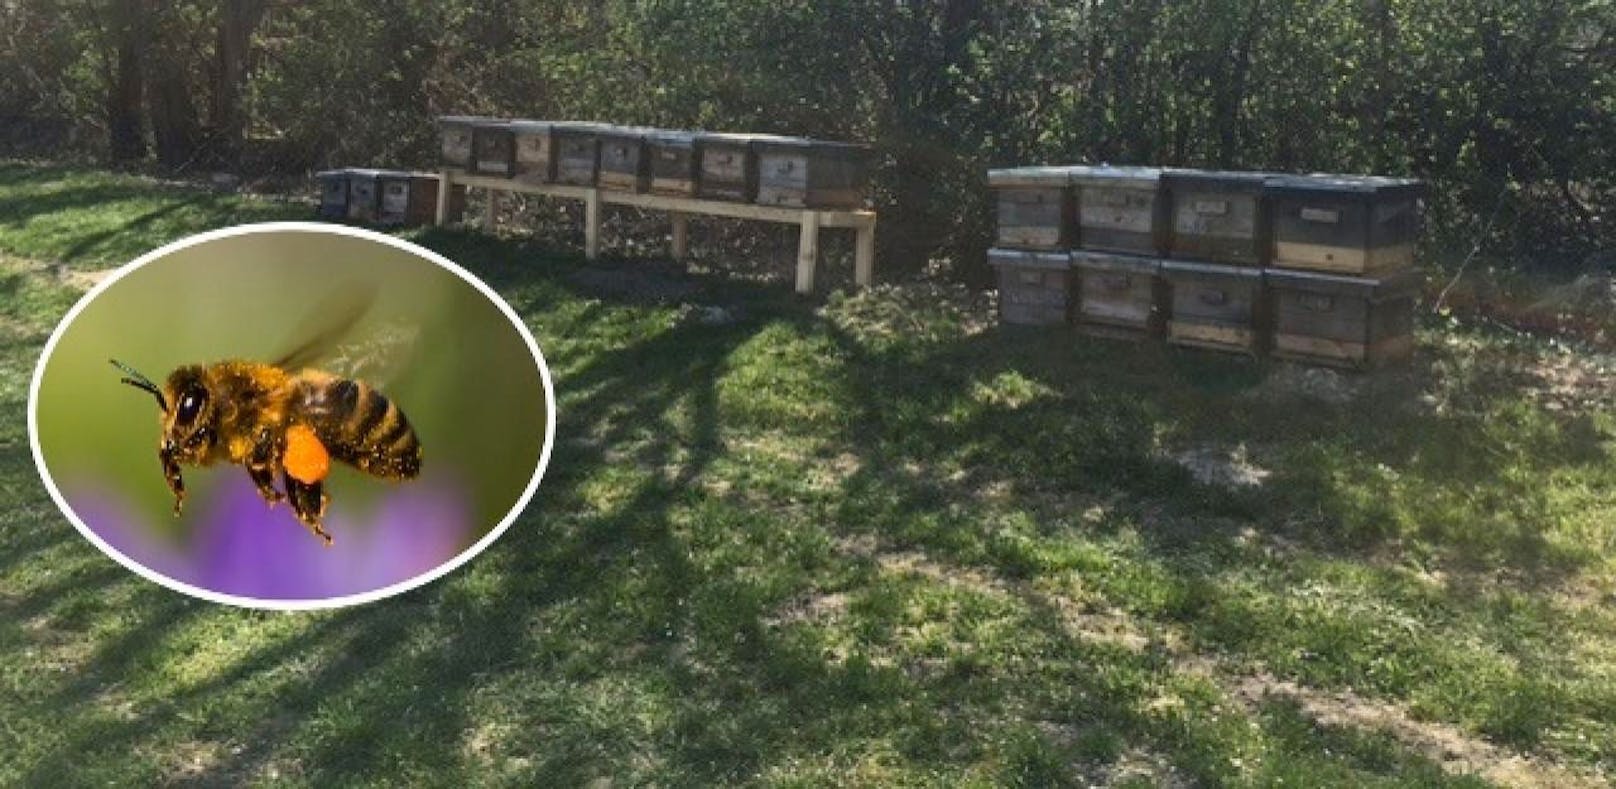 13 Bienenstöcke mitsamt Tieren gestohlen